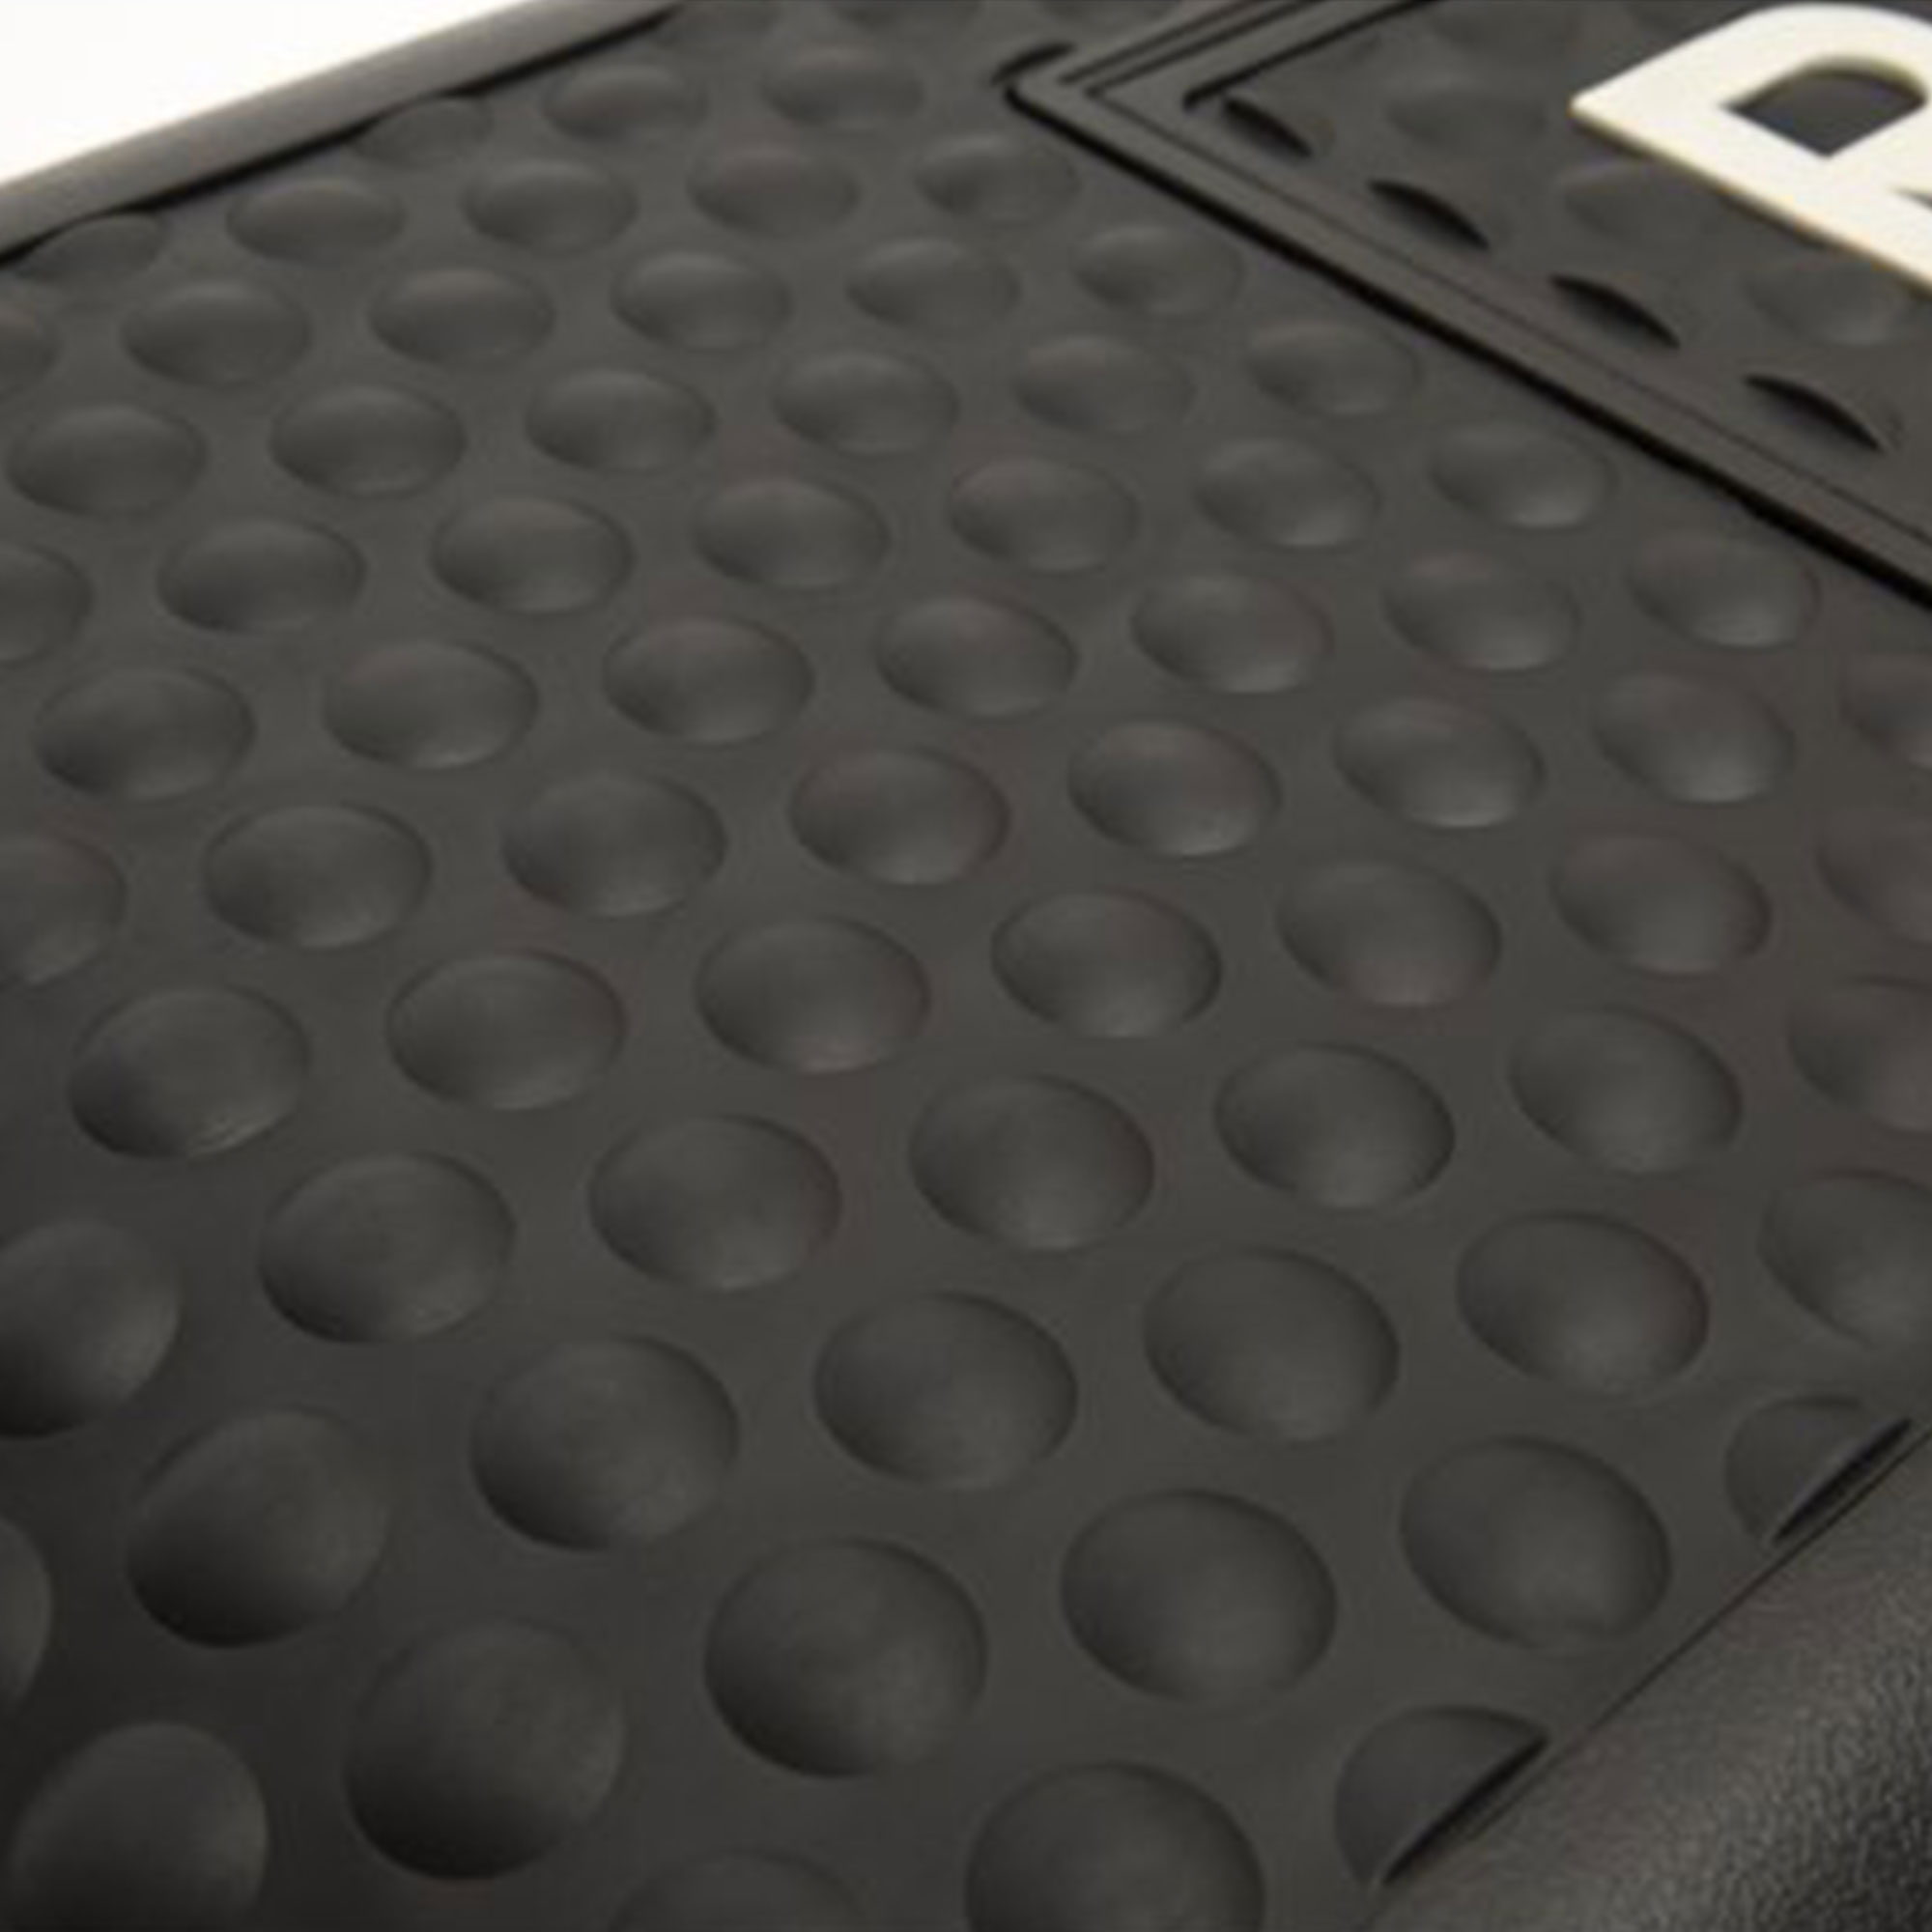 Reebok Professional Multi-Purpose Aerobic Challenging Home Fitness Deck, Black - image 6 of 12